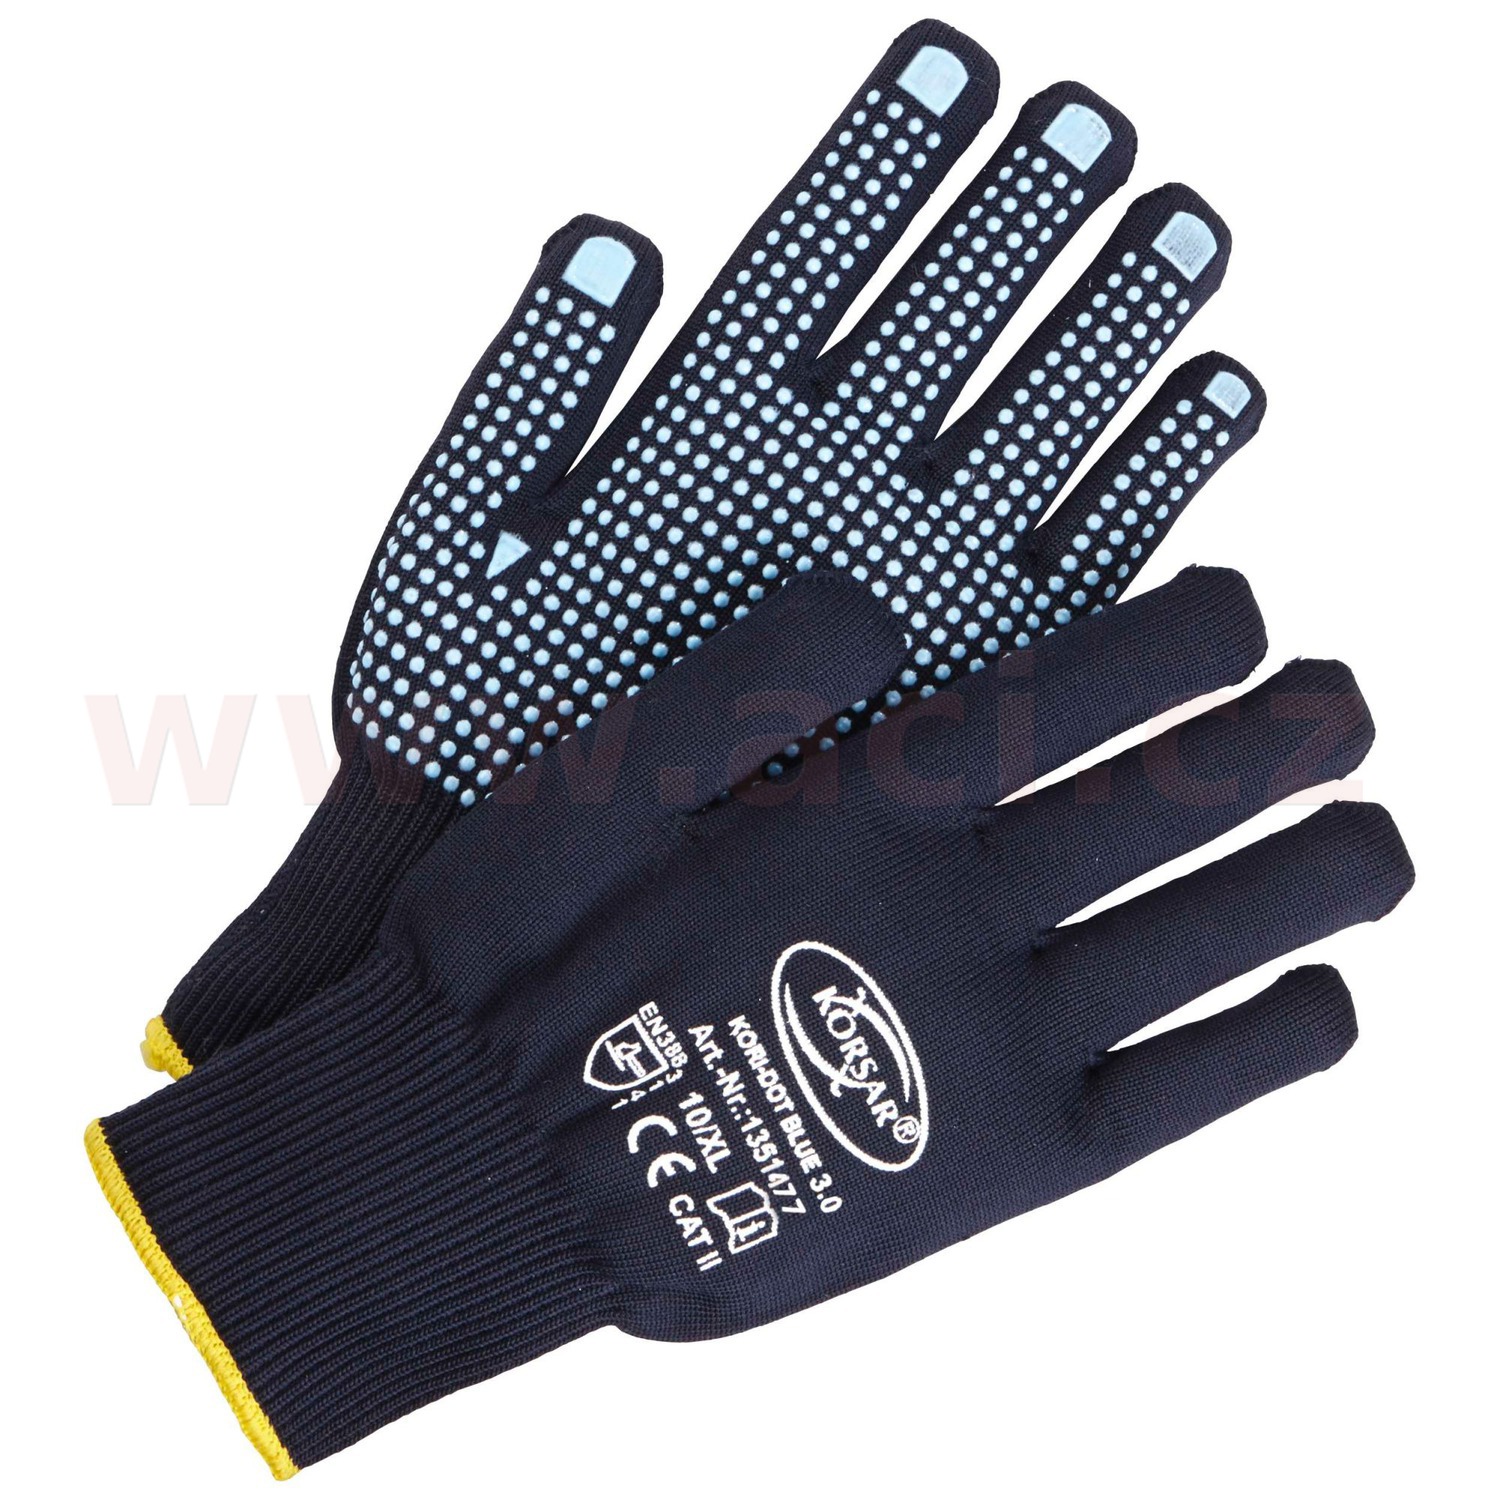 Obrázek produktu Pracovní rukavice Korsar Kori-Dot Blue 3.0 modrá polyamid (sada 12 párů) 1351477